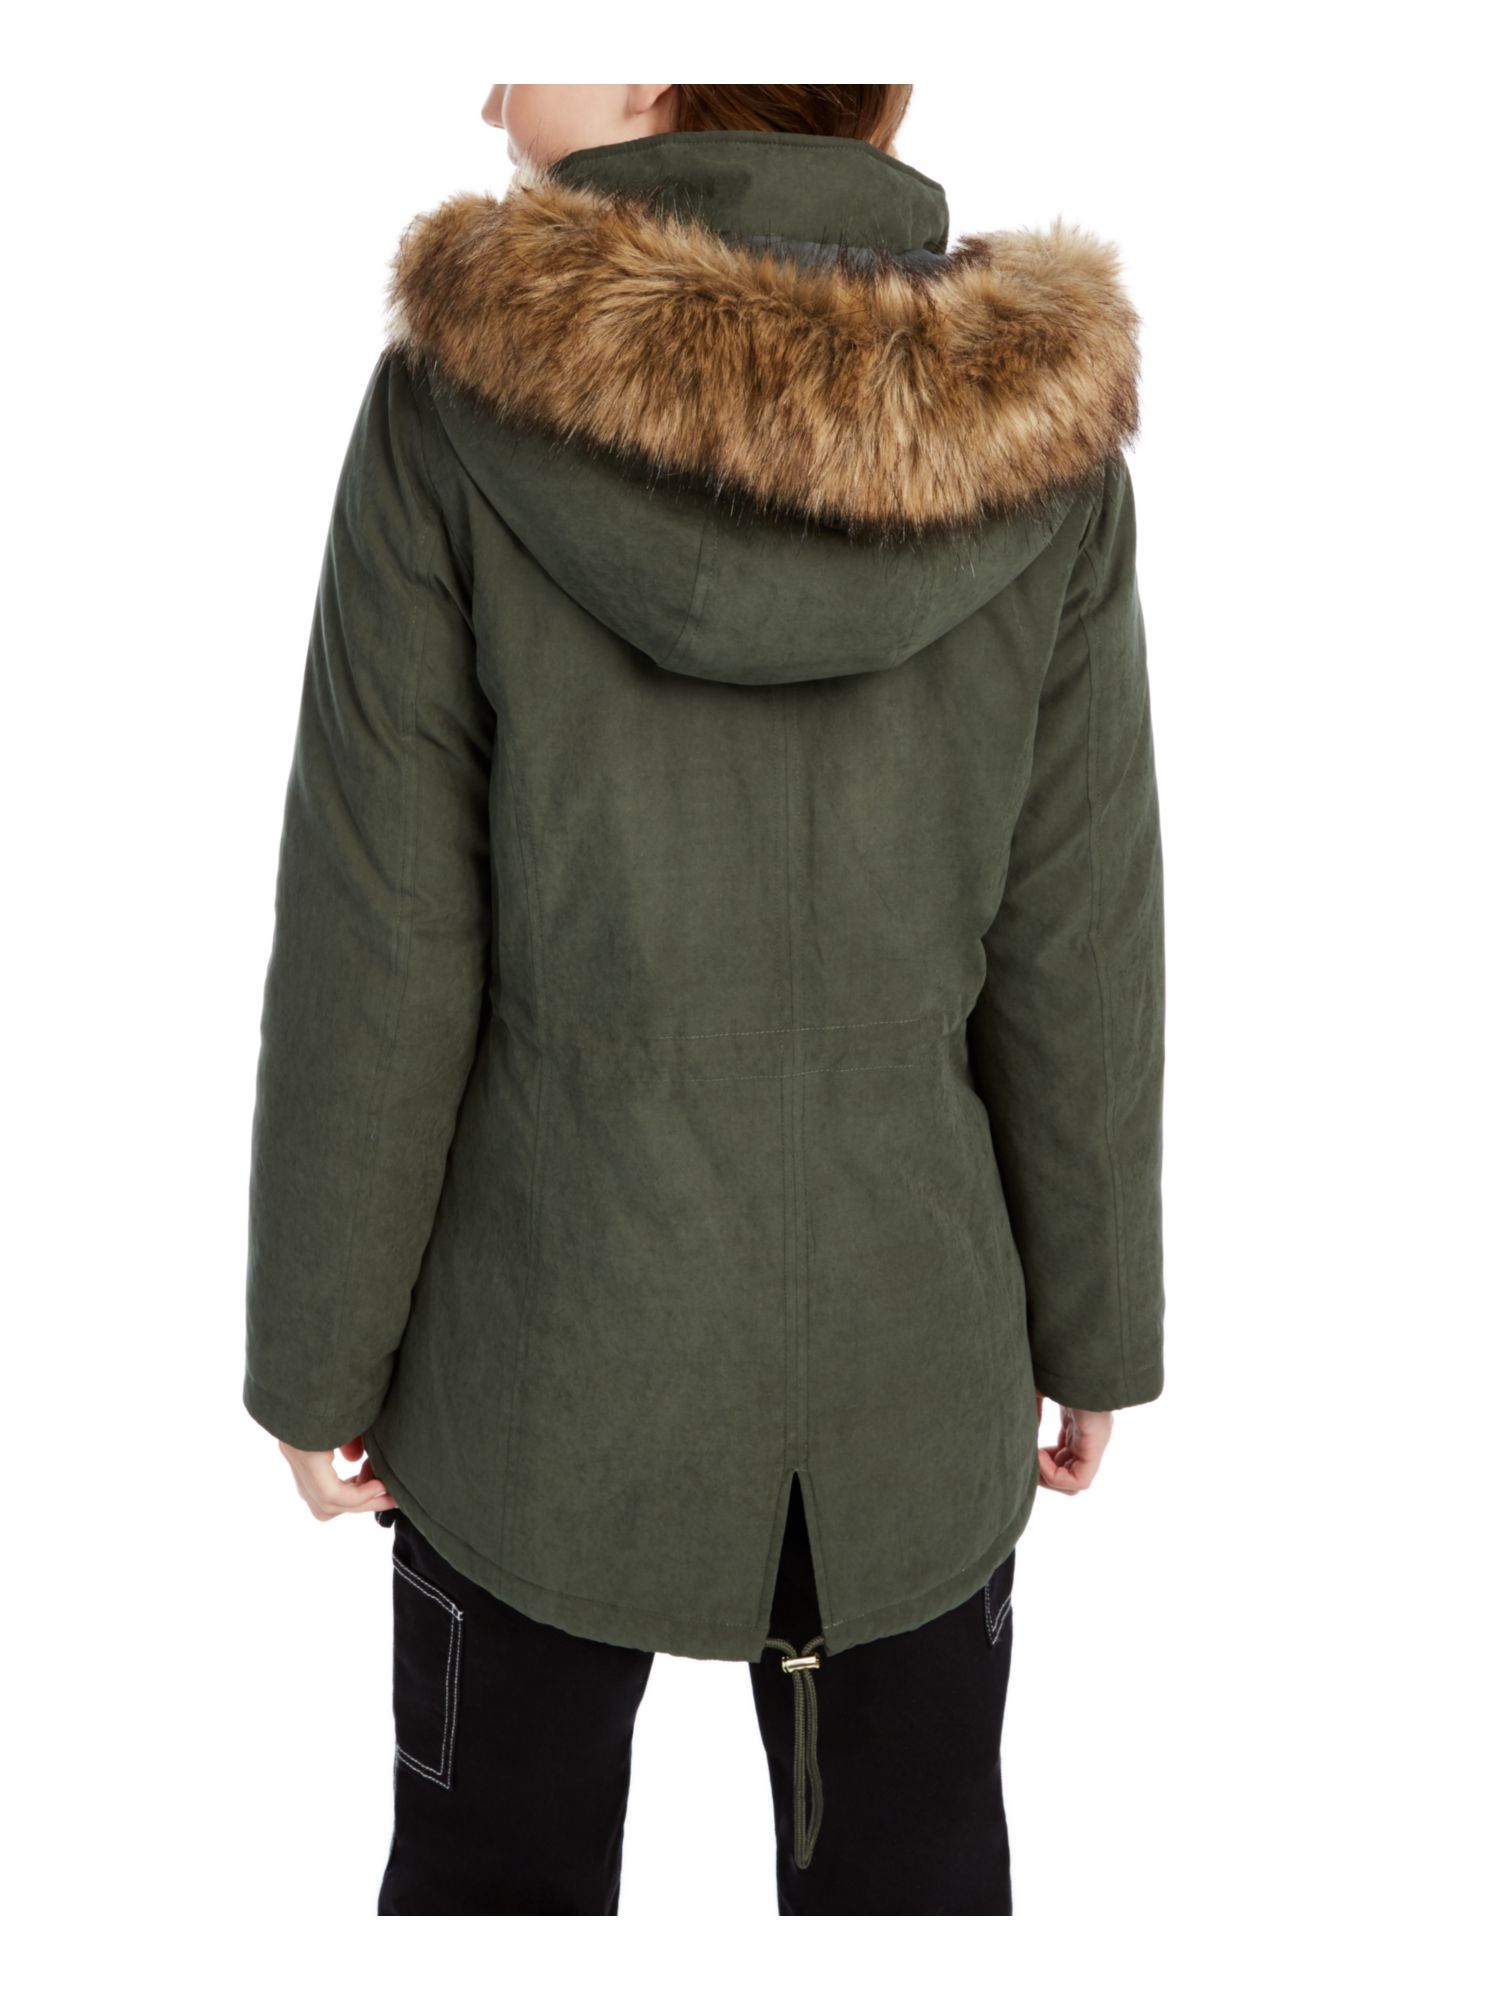 CELEBRITY PINK Womens Green Faux Fur Hood Parka Winter Jacket Coat Juniors M - image 2 of 4